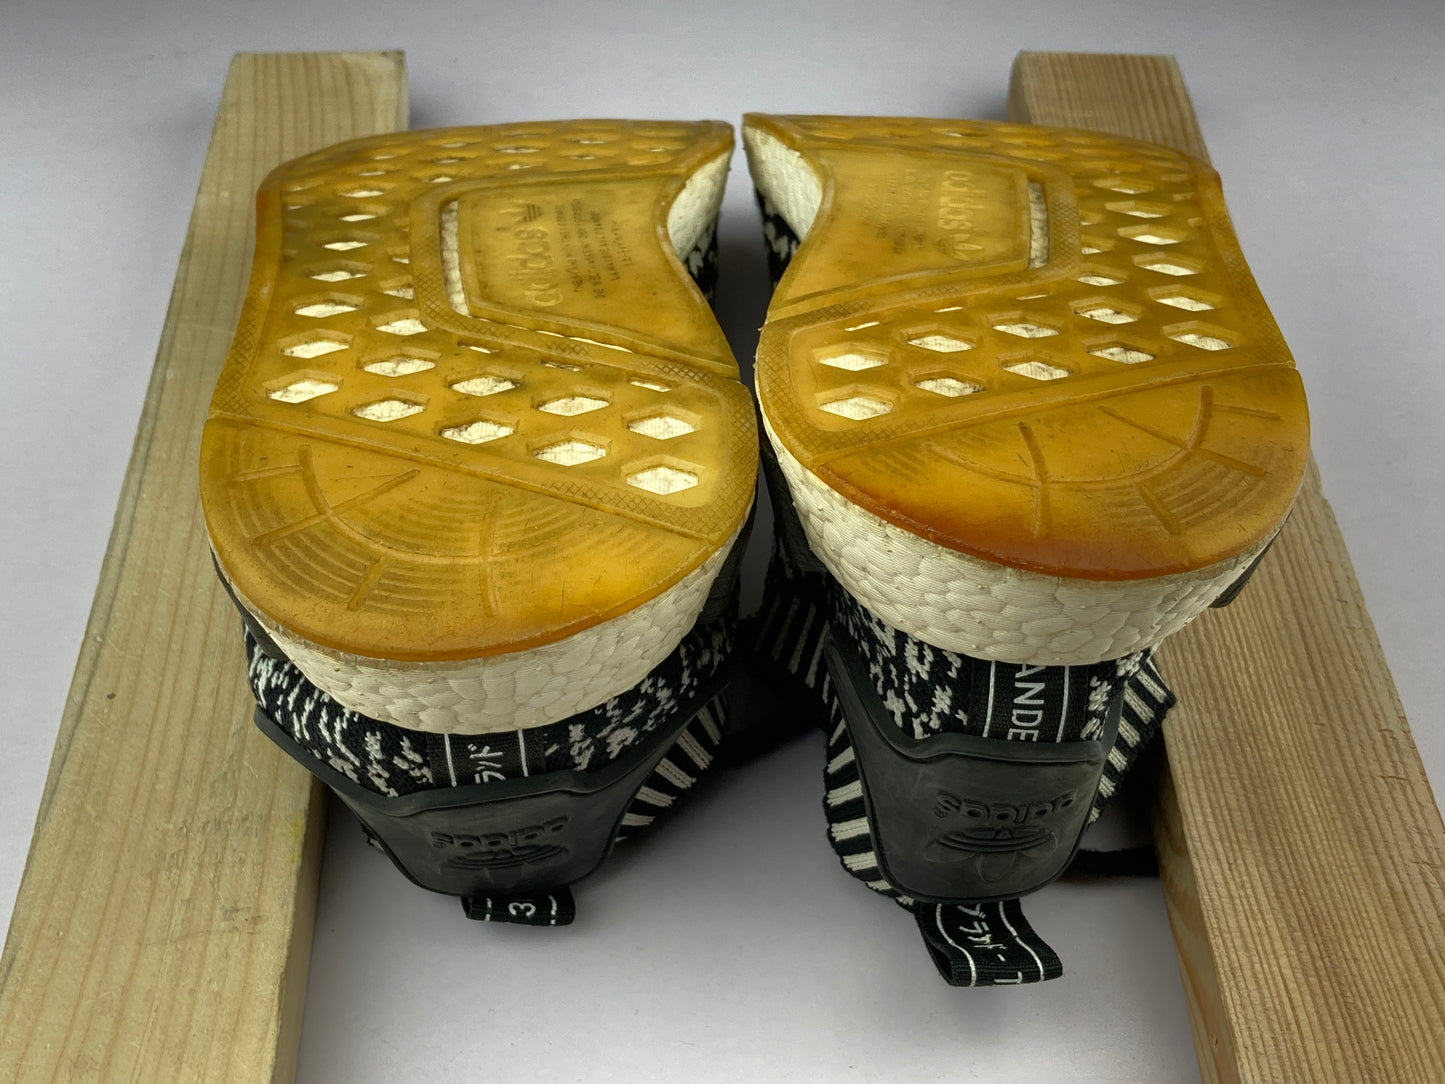 adidas NMD R1 Zebra 'Sashiko Black' BY3013-Sneakers-Athletic Corner